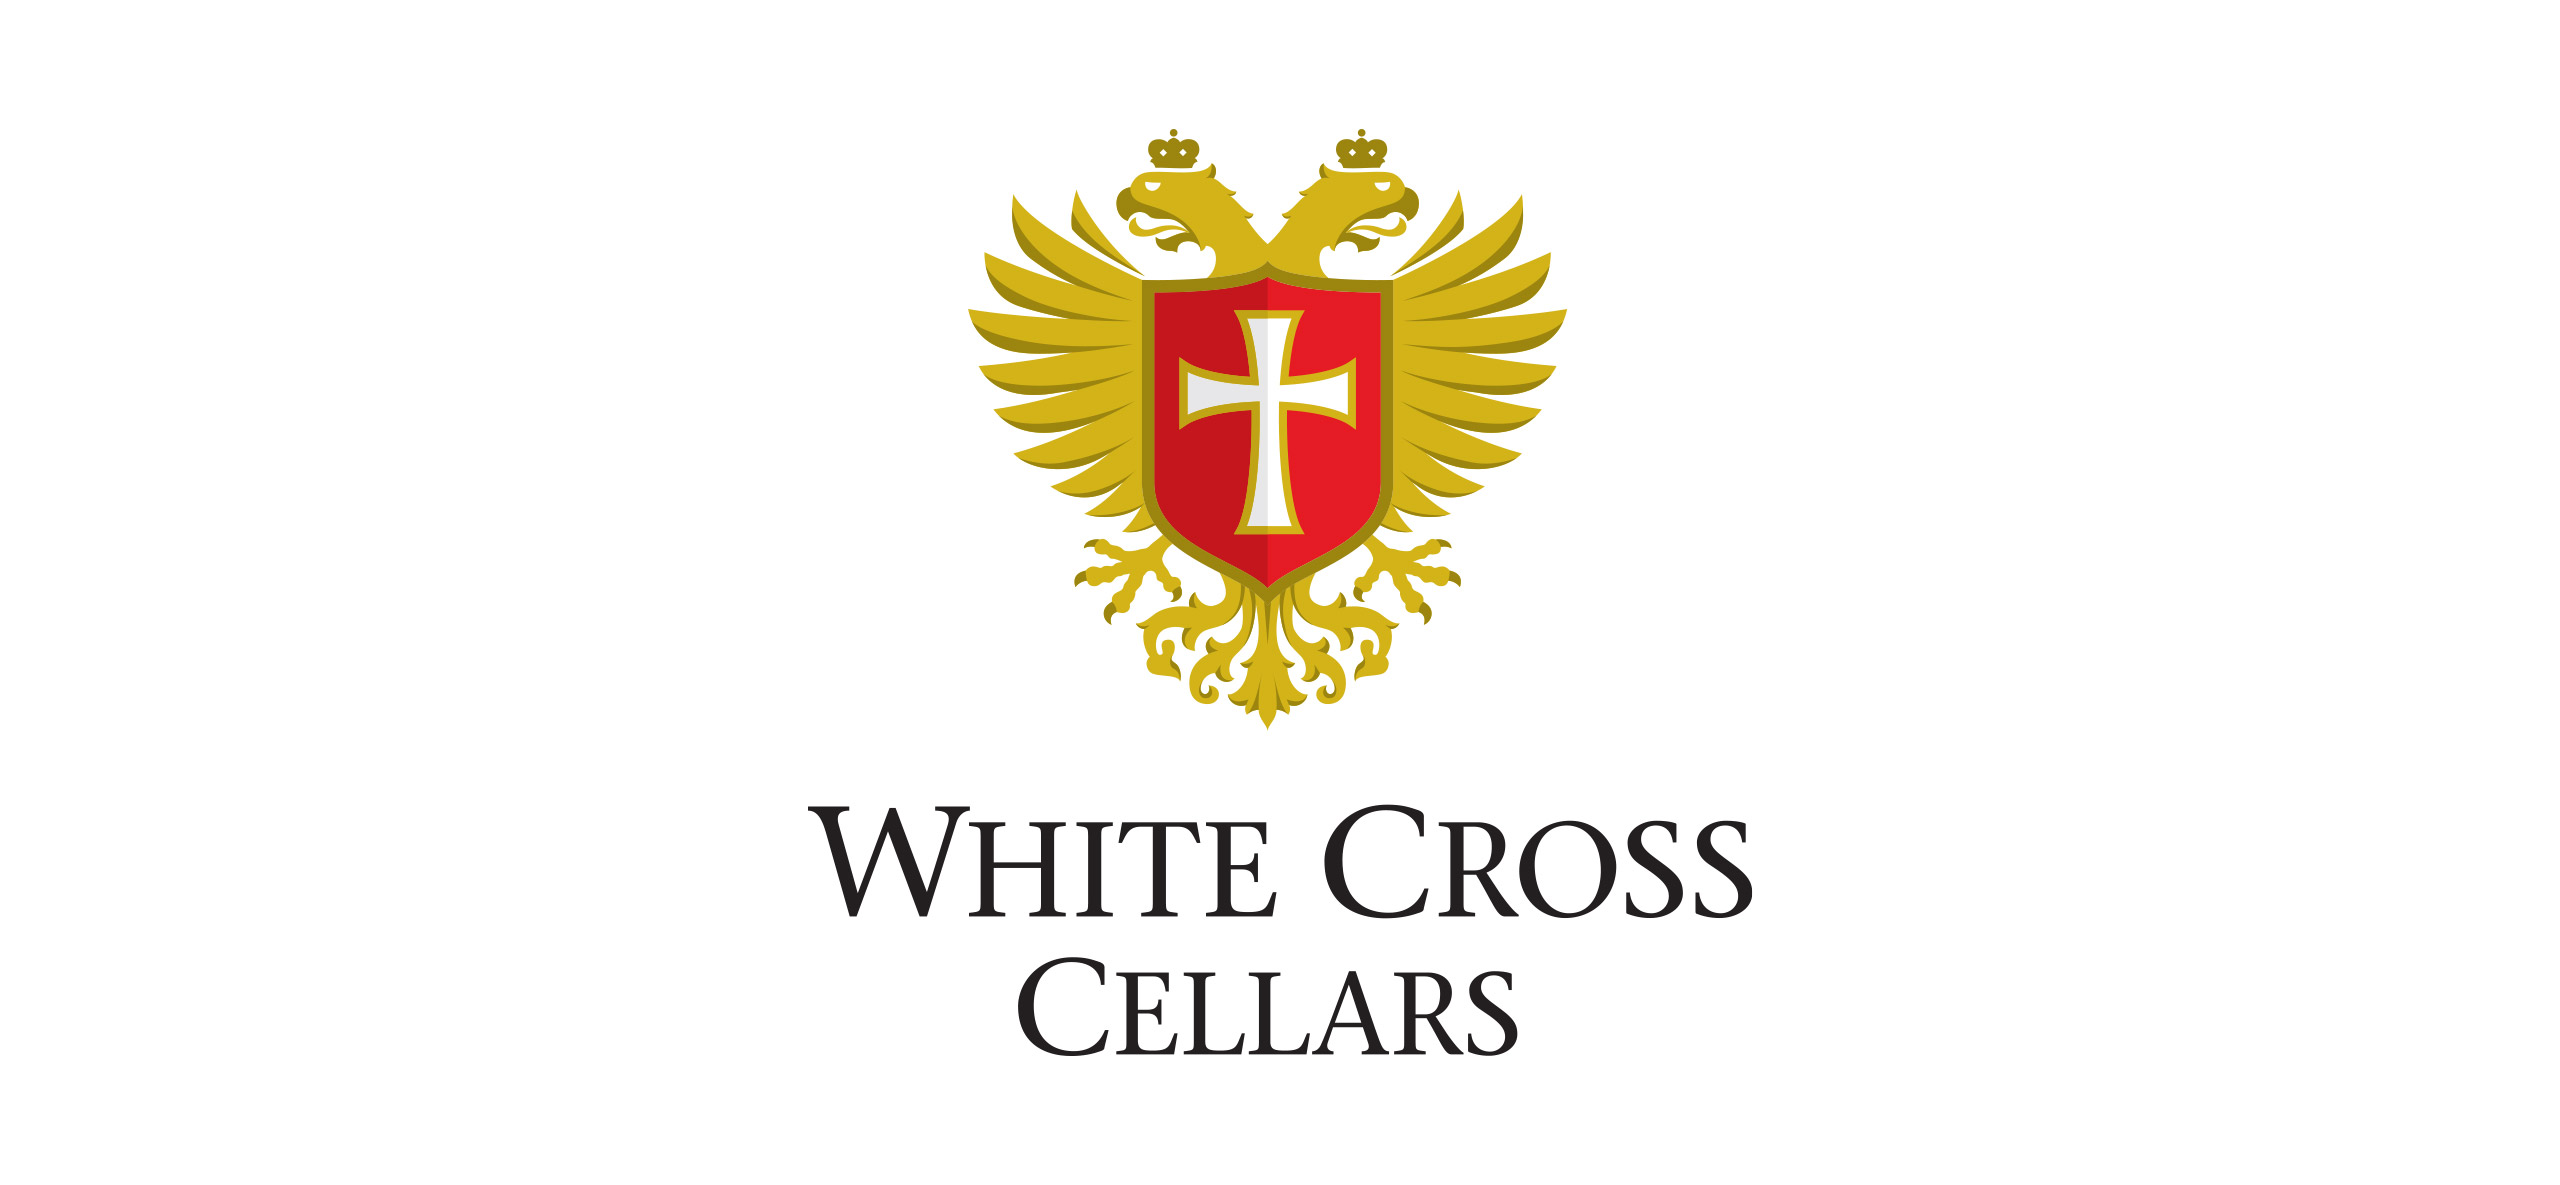 White Cross Cellars logo